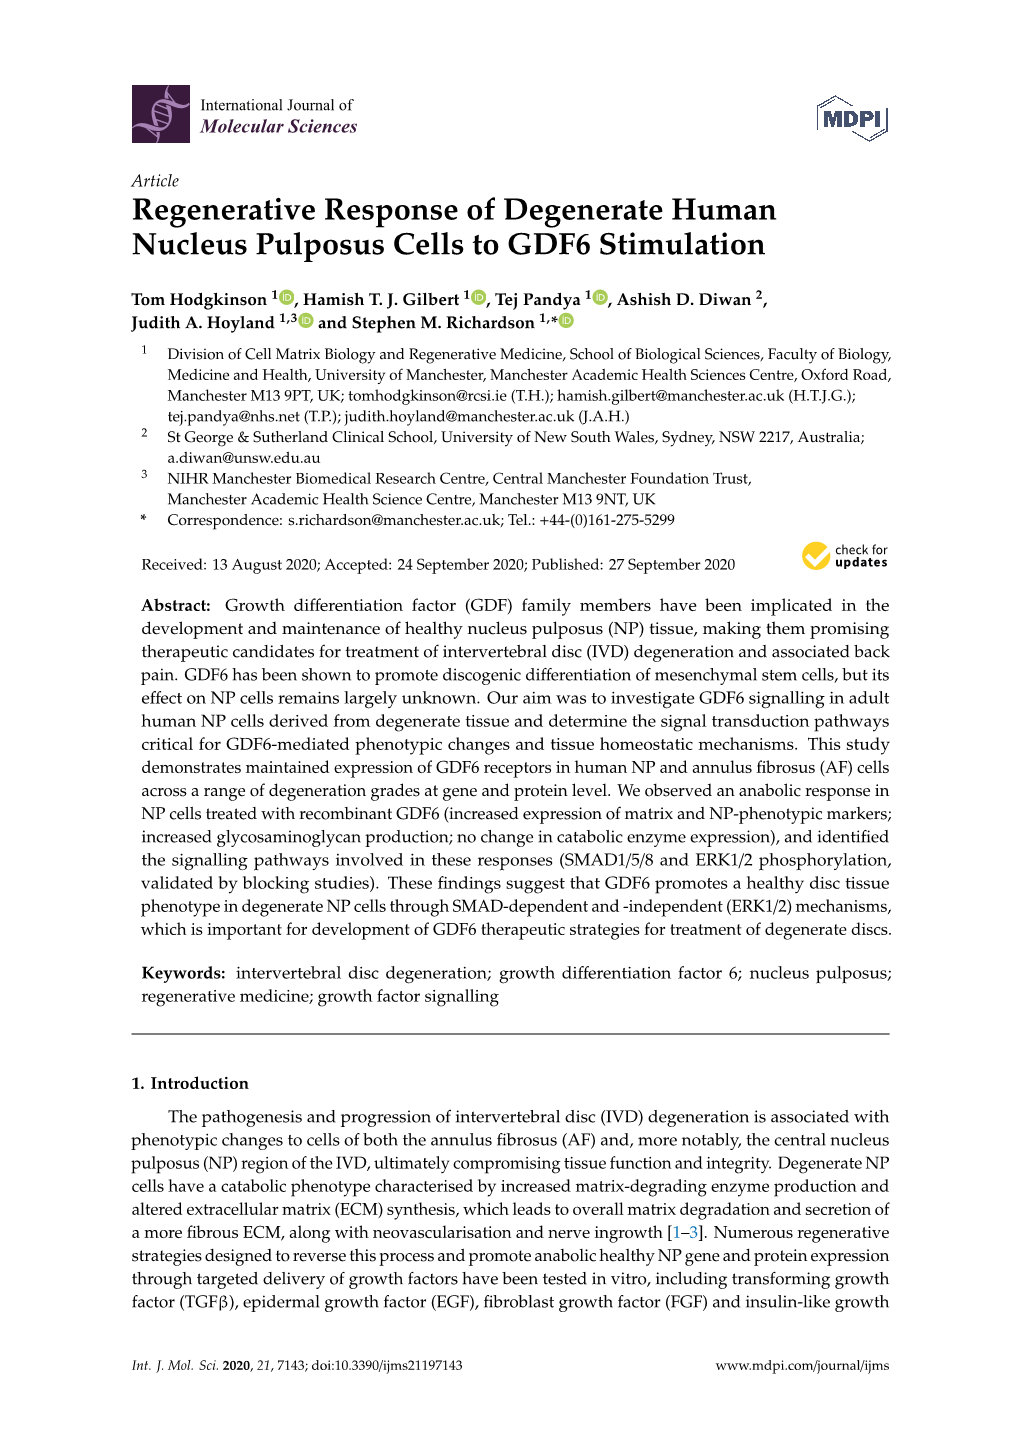 Regenerative Response of Degenerate Human Nucleus Pulposus Cells to GDF6 Stimulation